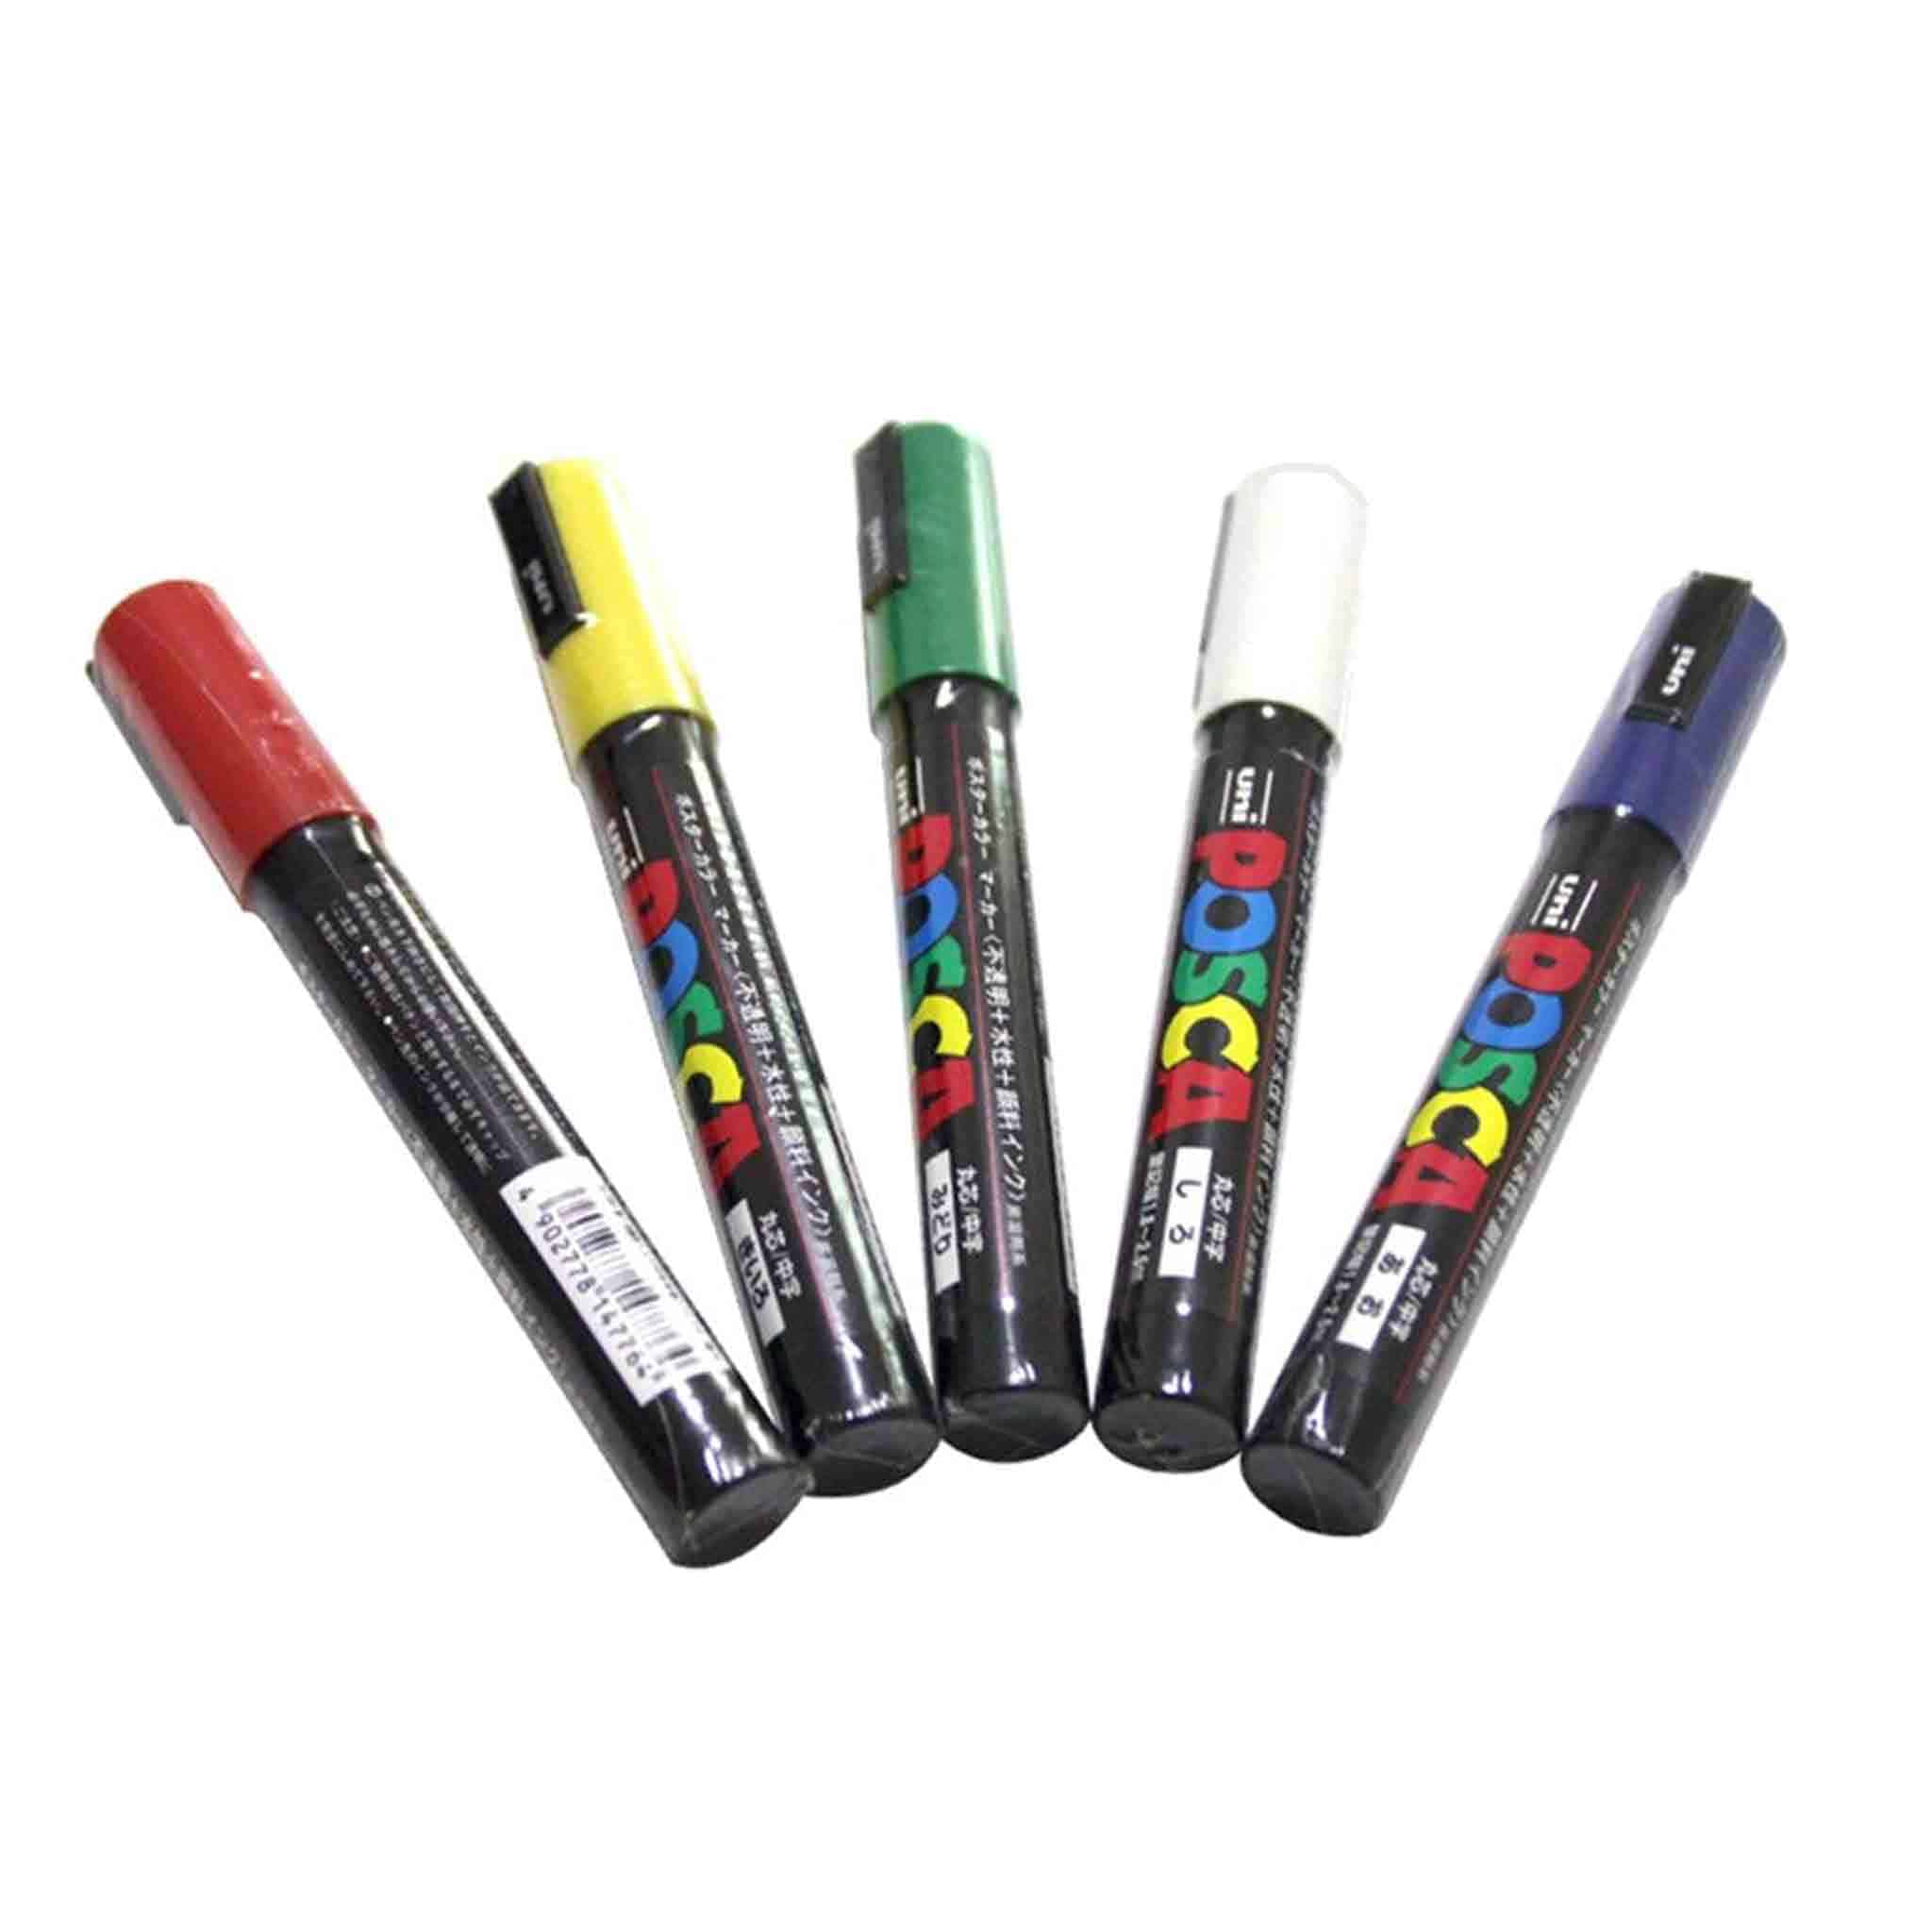 Queen Bee Marking Pen (Range of colours) - Accessories collection by Buzzbee Beekeeping Supplies